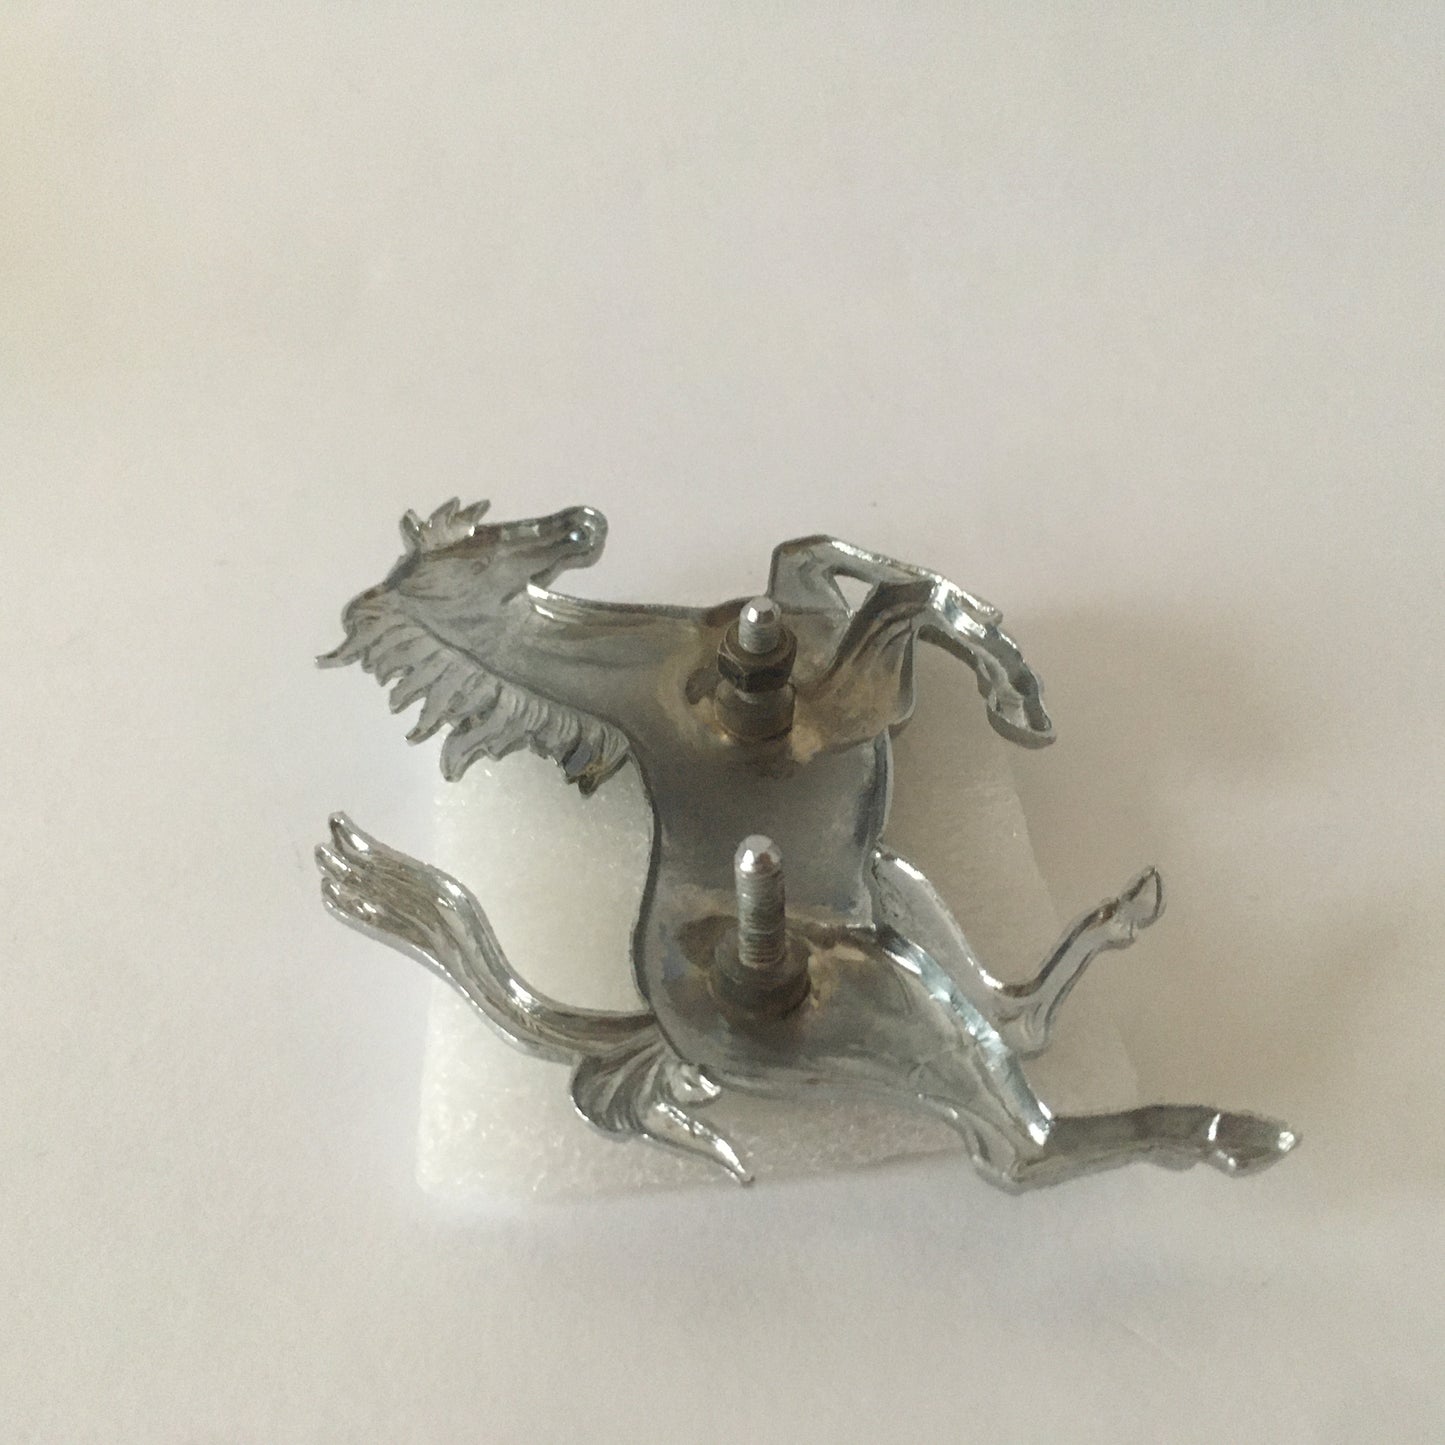 Ferrari, Original Prancing Horse in Silver Metal, Screw Fixing, Excellent Condition